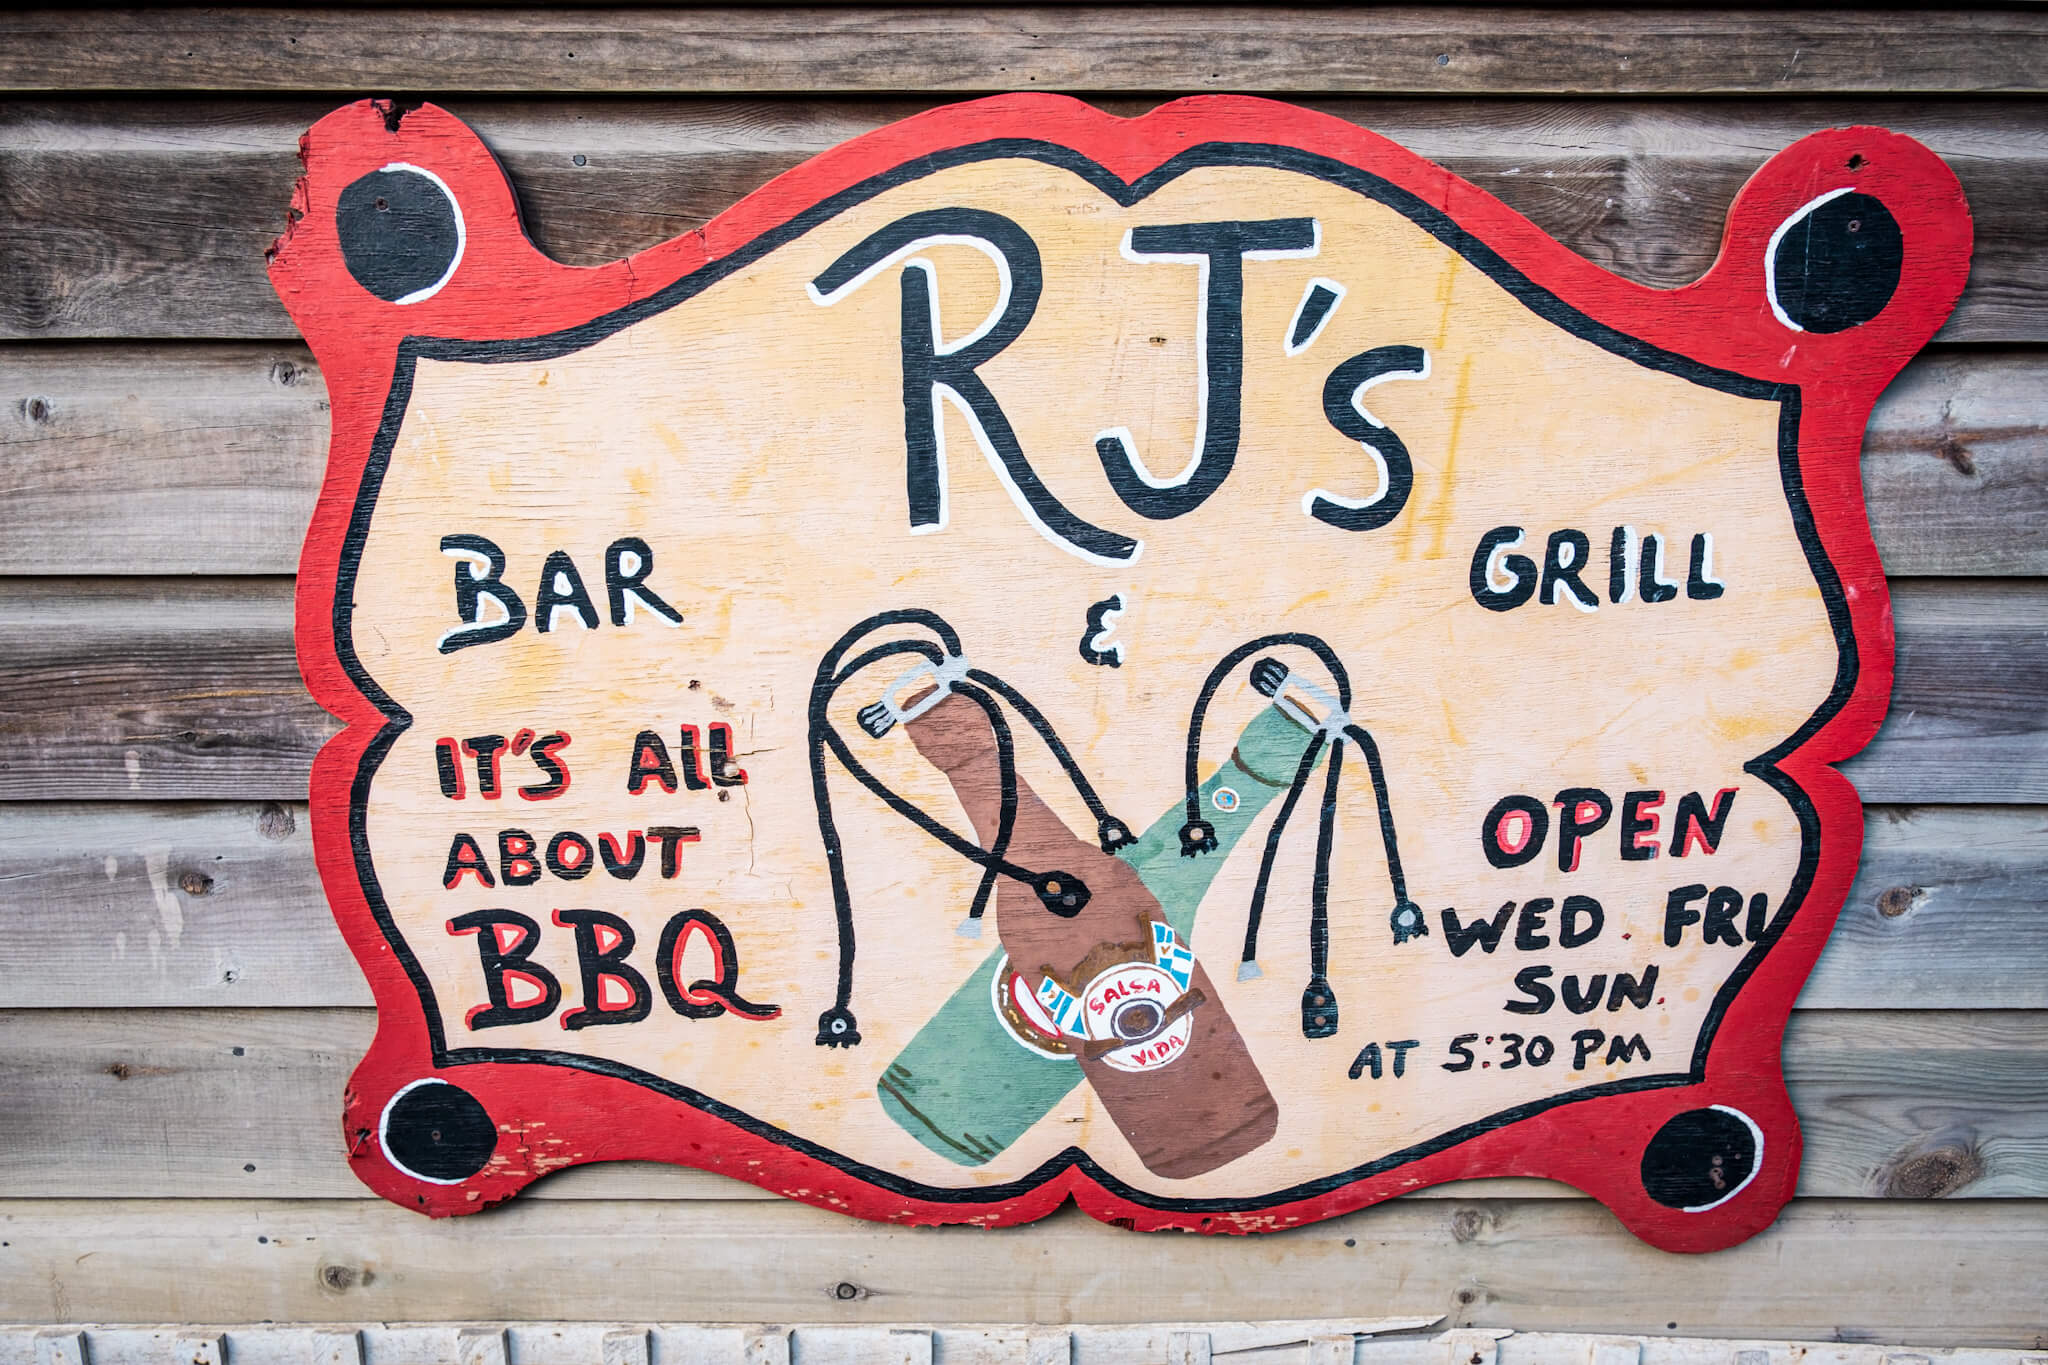 RJ’s Bar & Grill in Utila